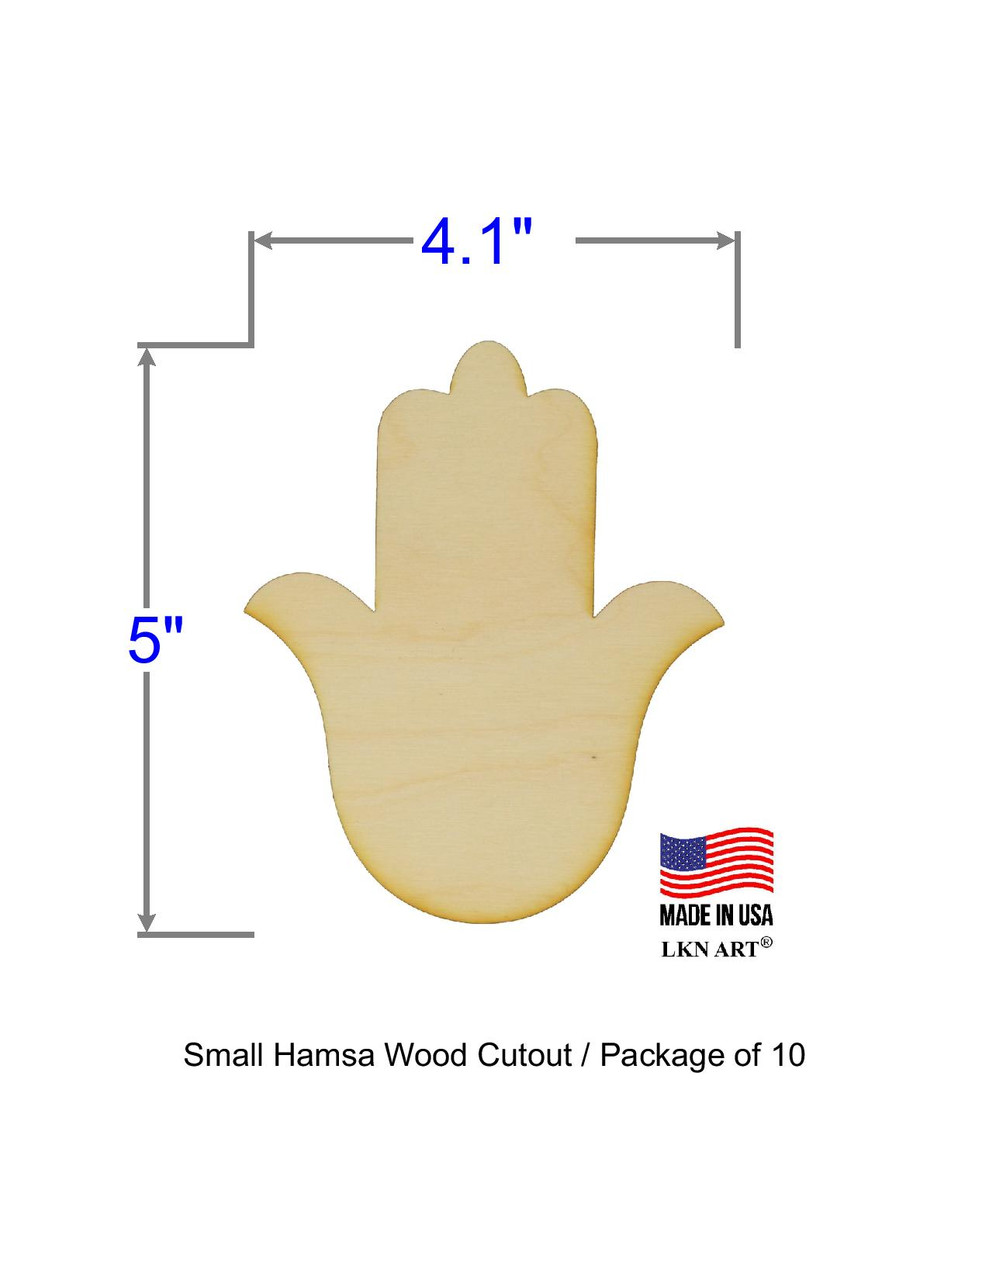 Hamsa Outline / Macrame Mobile / Wooden Cut Out Shapes / Wooden Shapes for  Crafts 